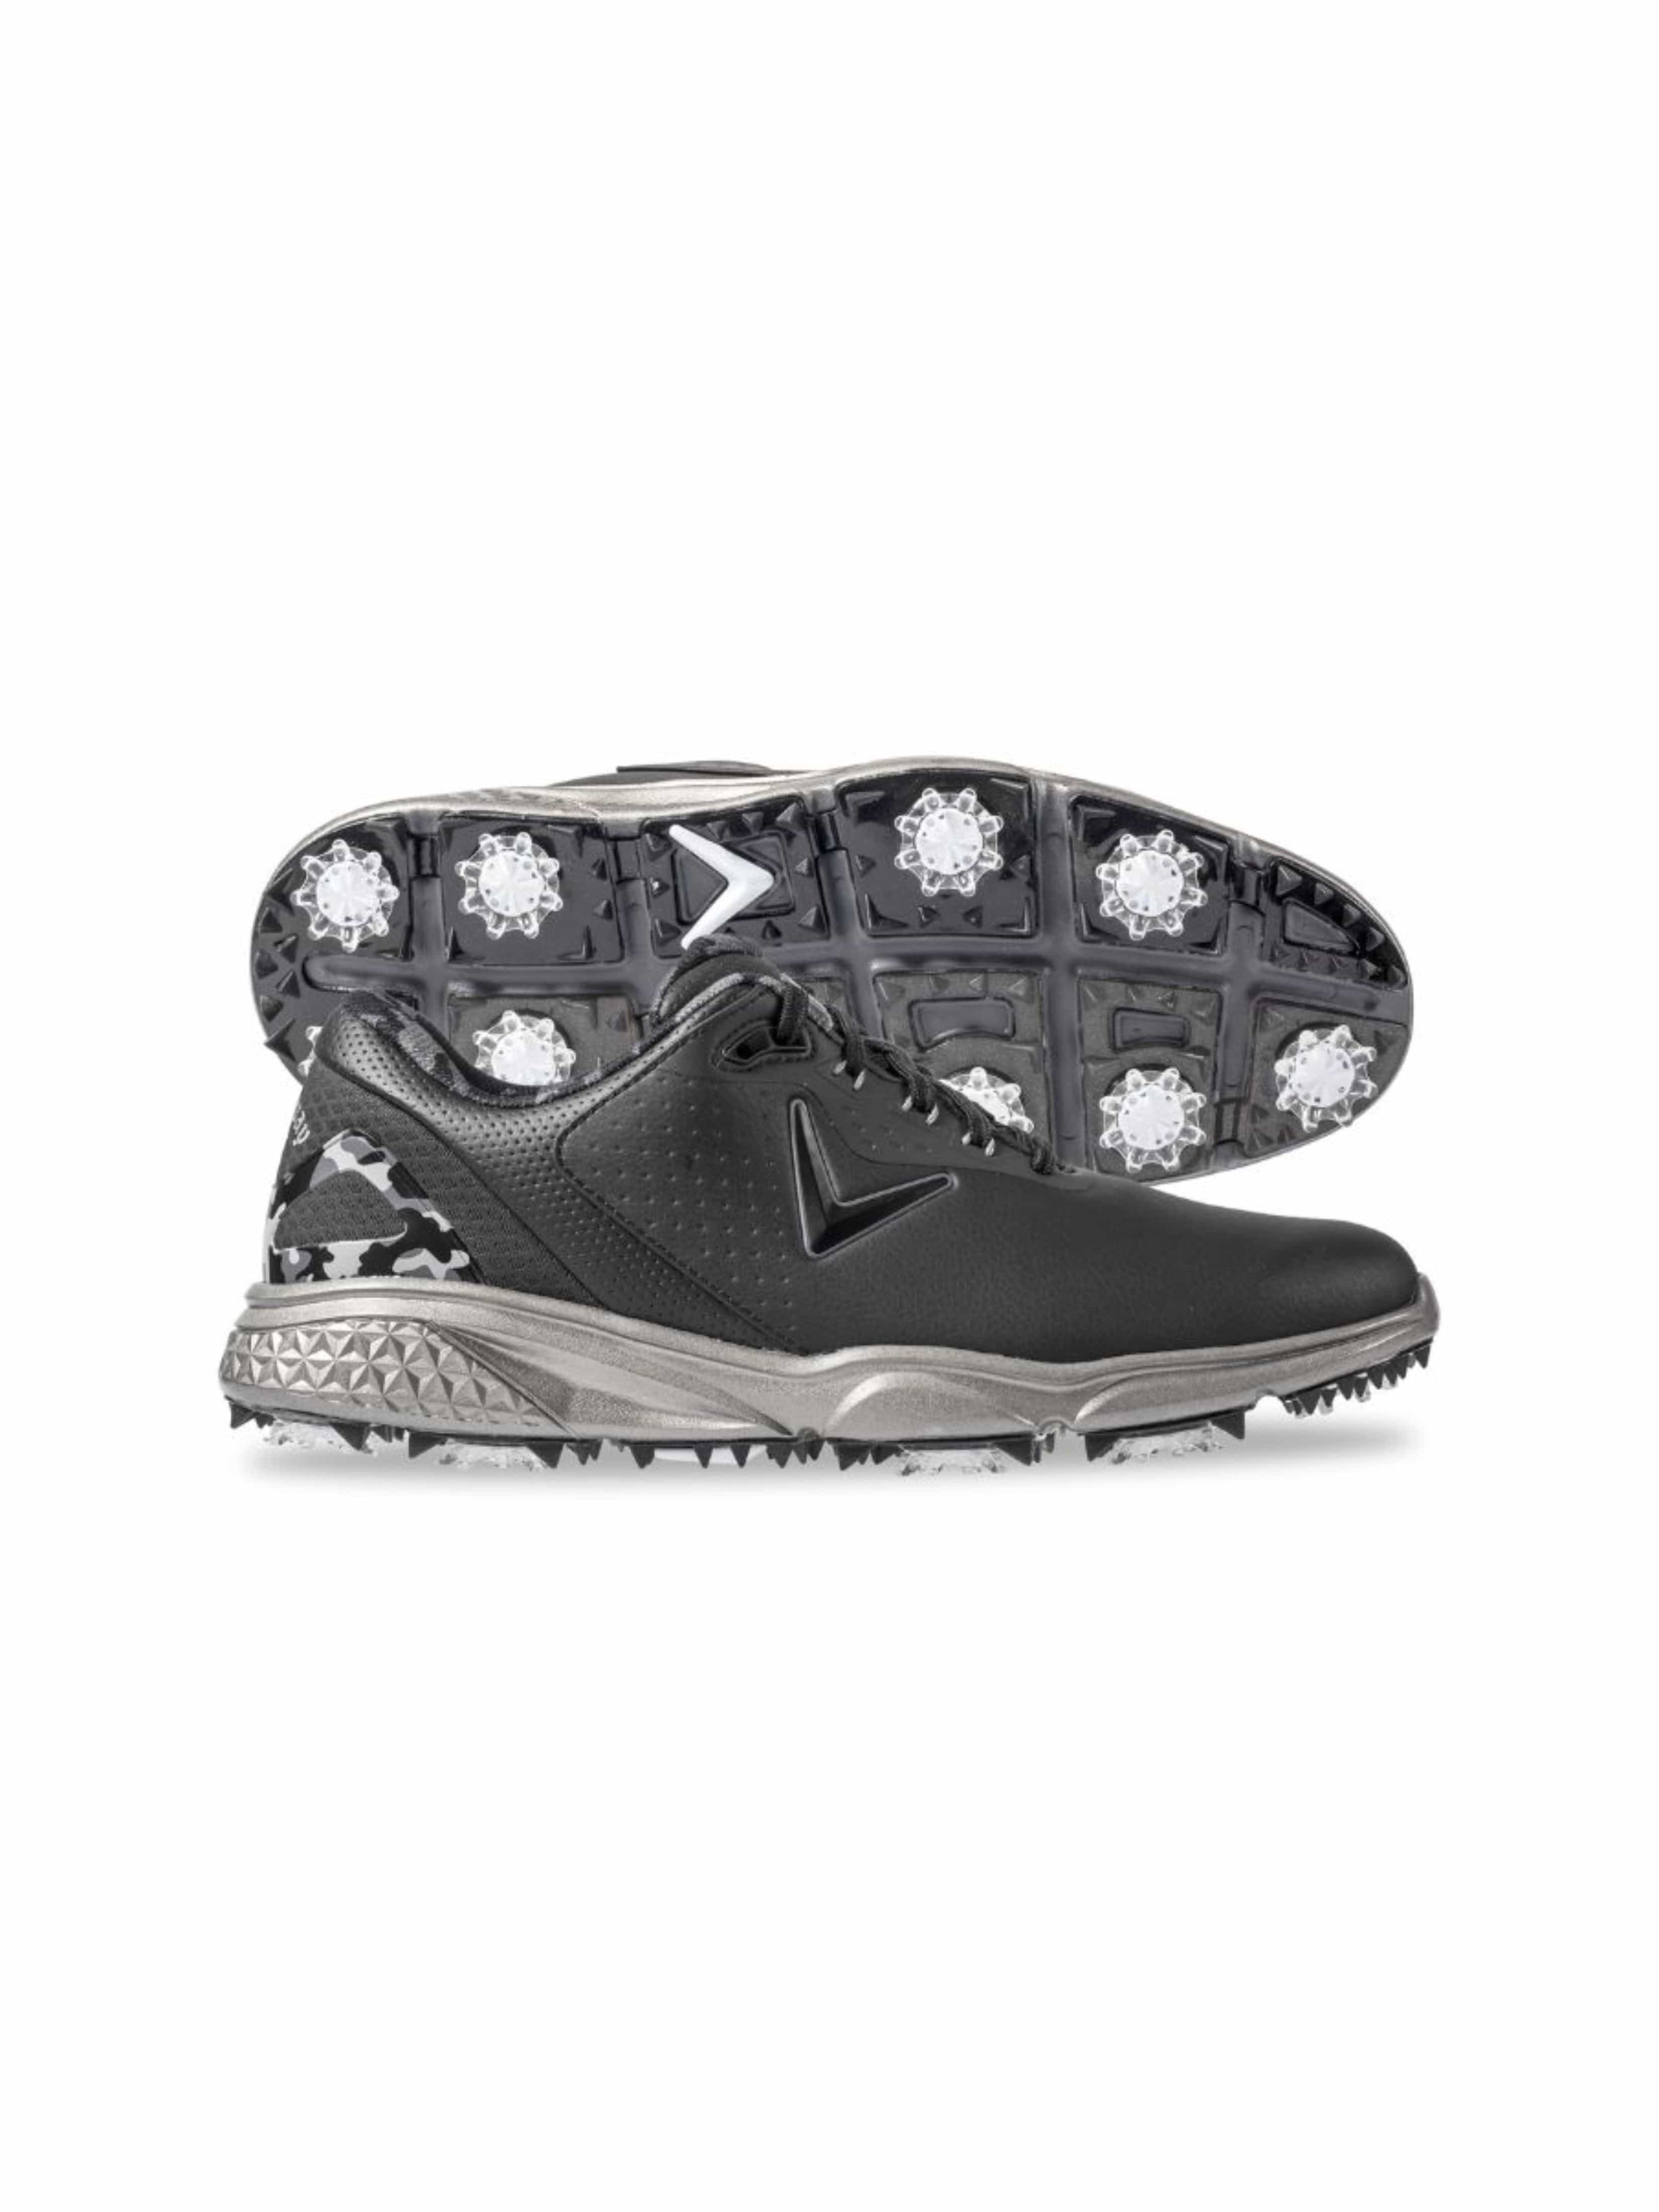 Callaway Apparel Mens Coronado V2 Golf Shoes, Size 10, Black, Polyurethane/Nylon | Golf Apparel Shop